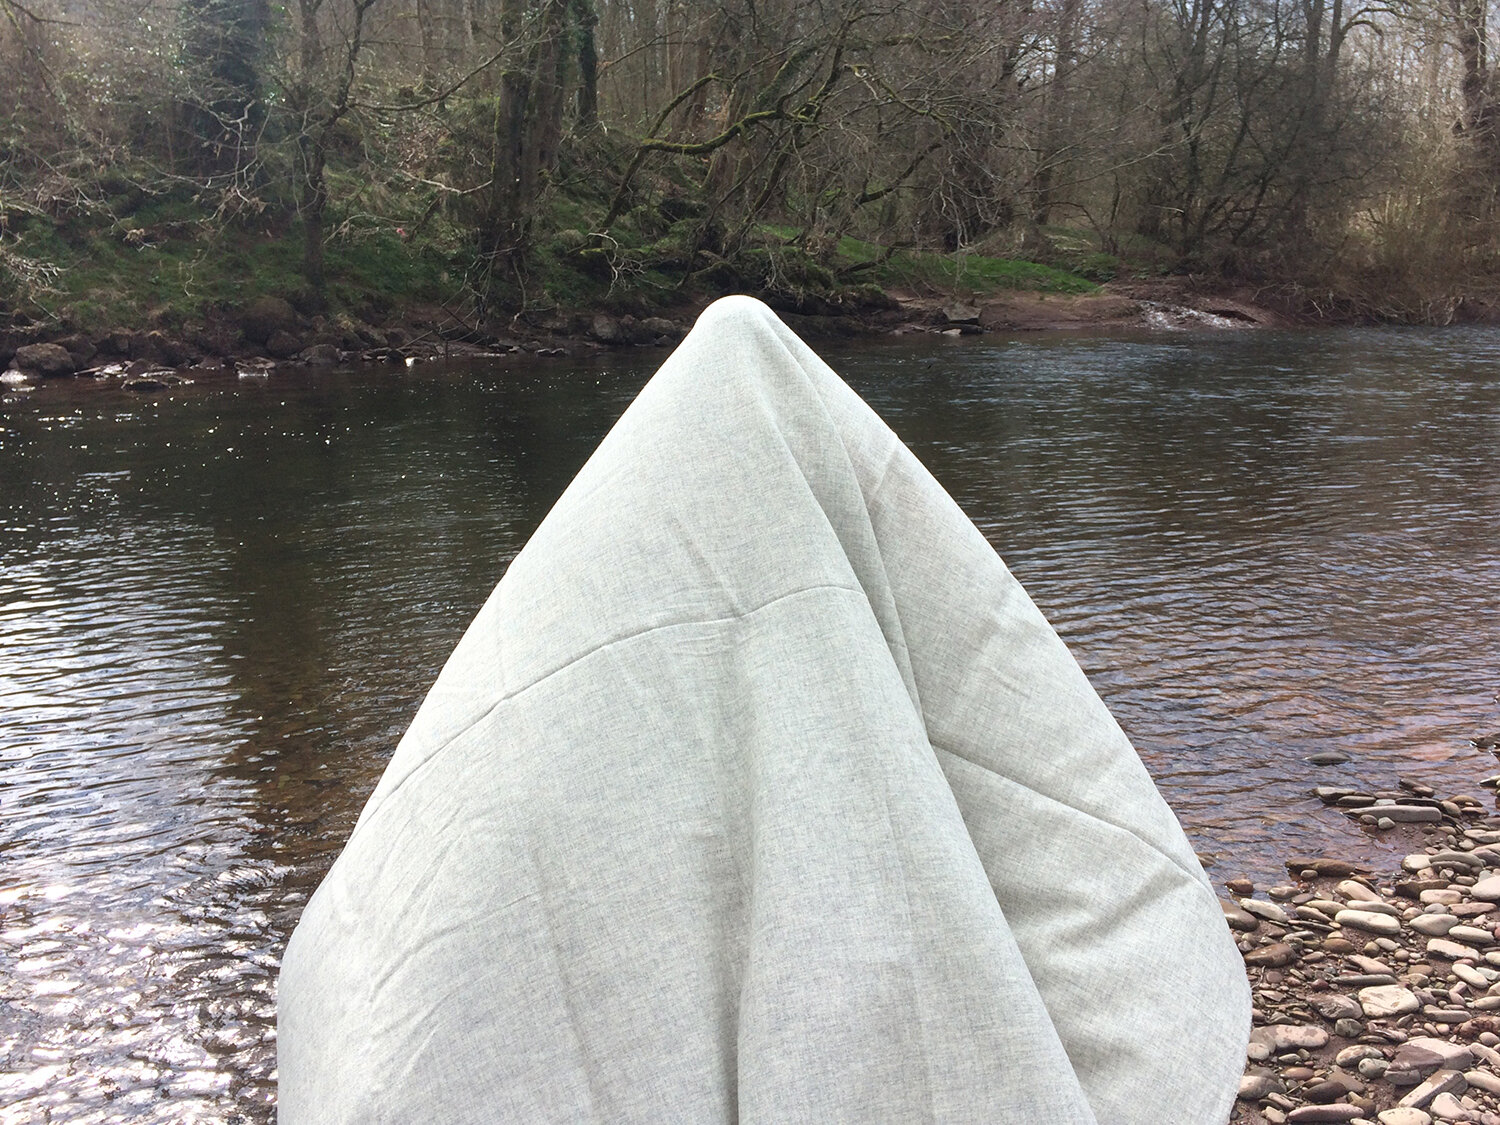 parangolés (river swimming), 2020-21, welsh flannel